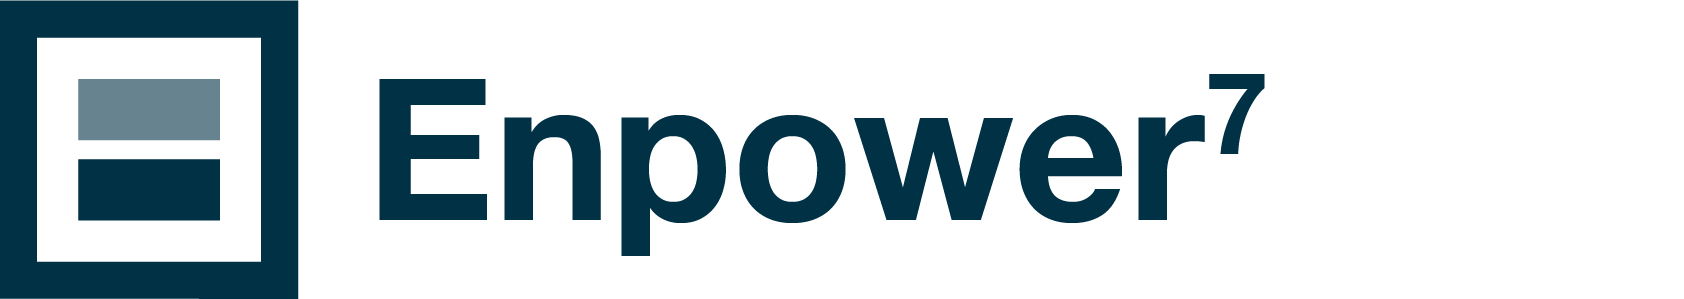 Enpower2-logo.png